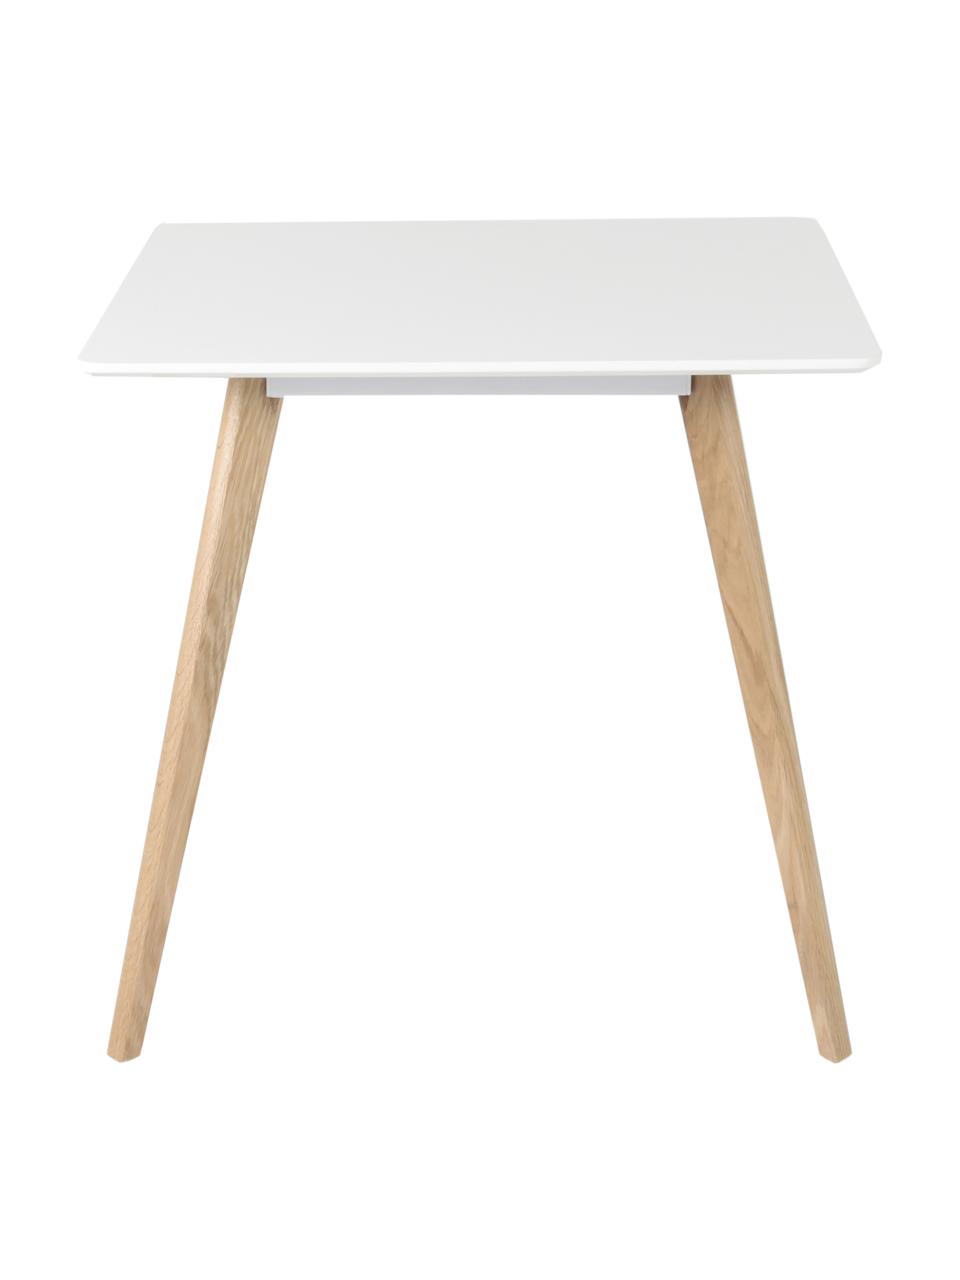 Petite table scandinave Flamy, 80 x 80 cm, Blanc, larg. 80 x prof. 80 cm